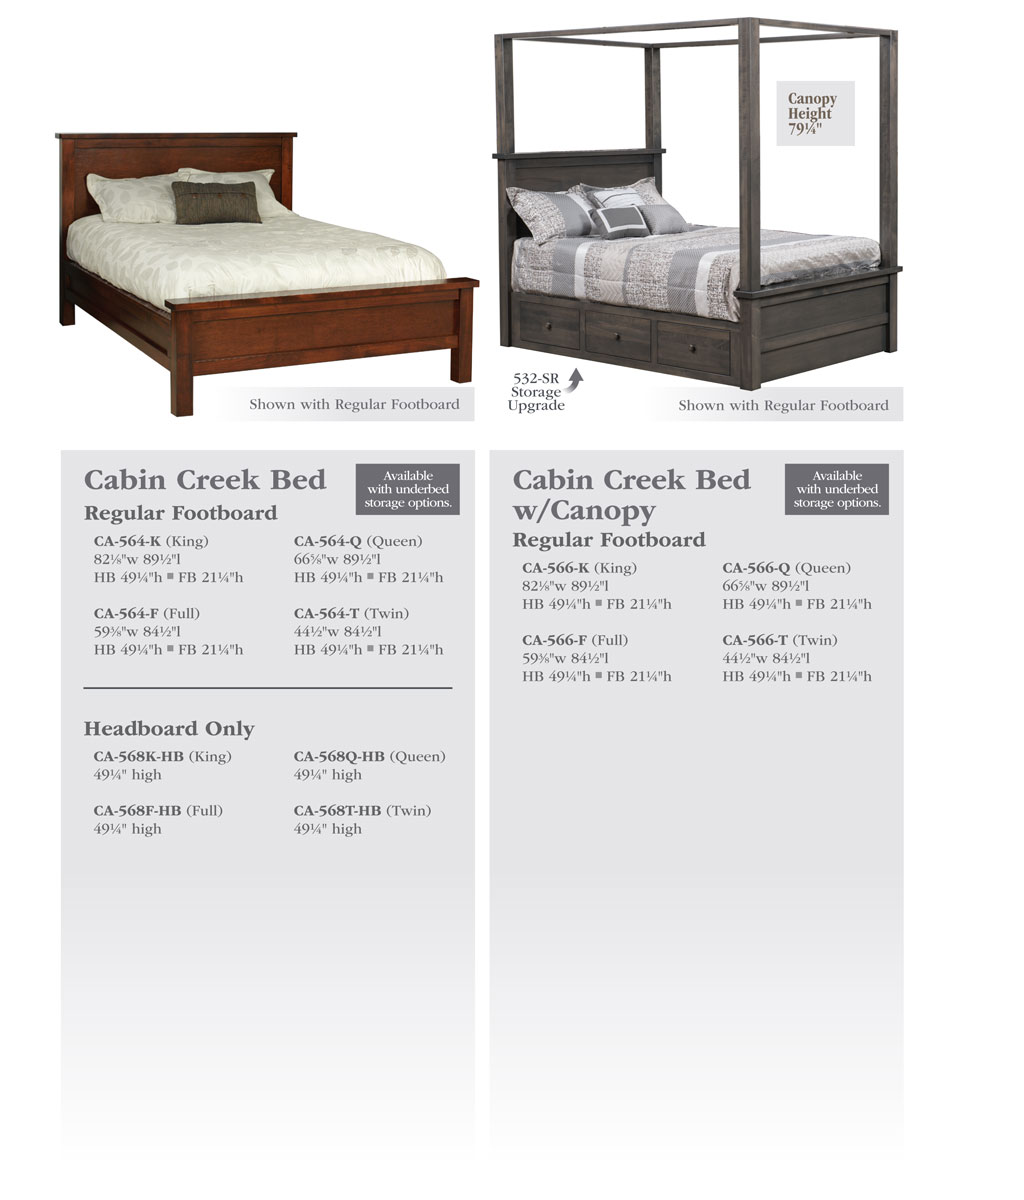 Cabin Creek Bed Options